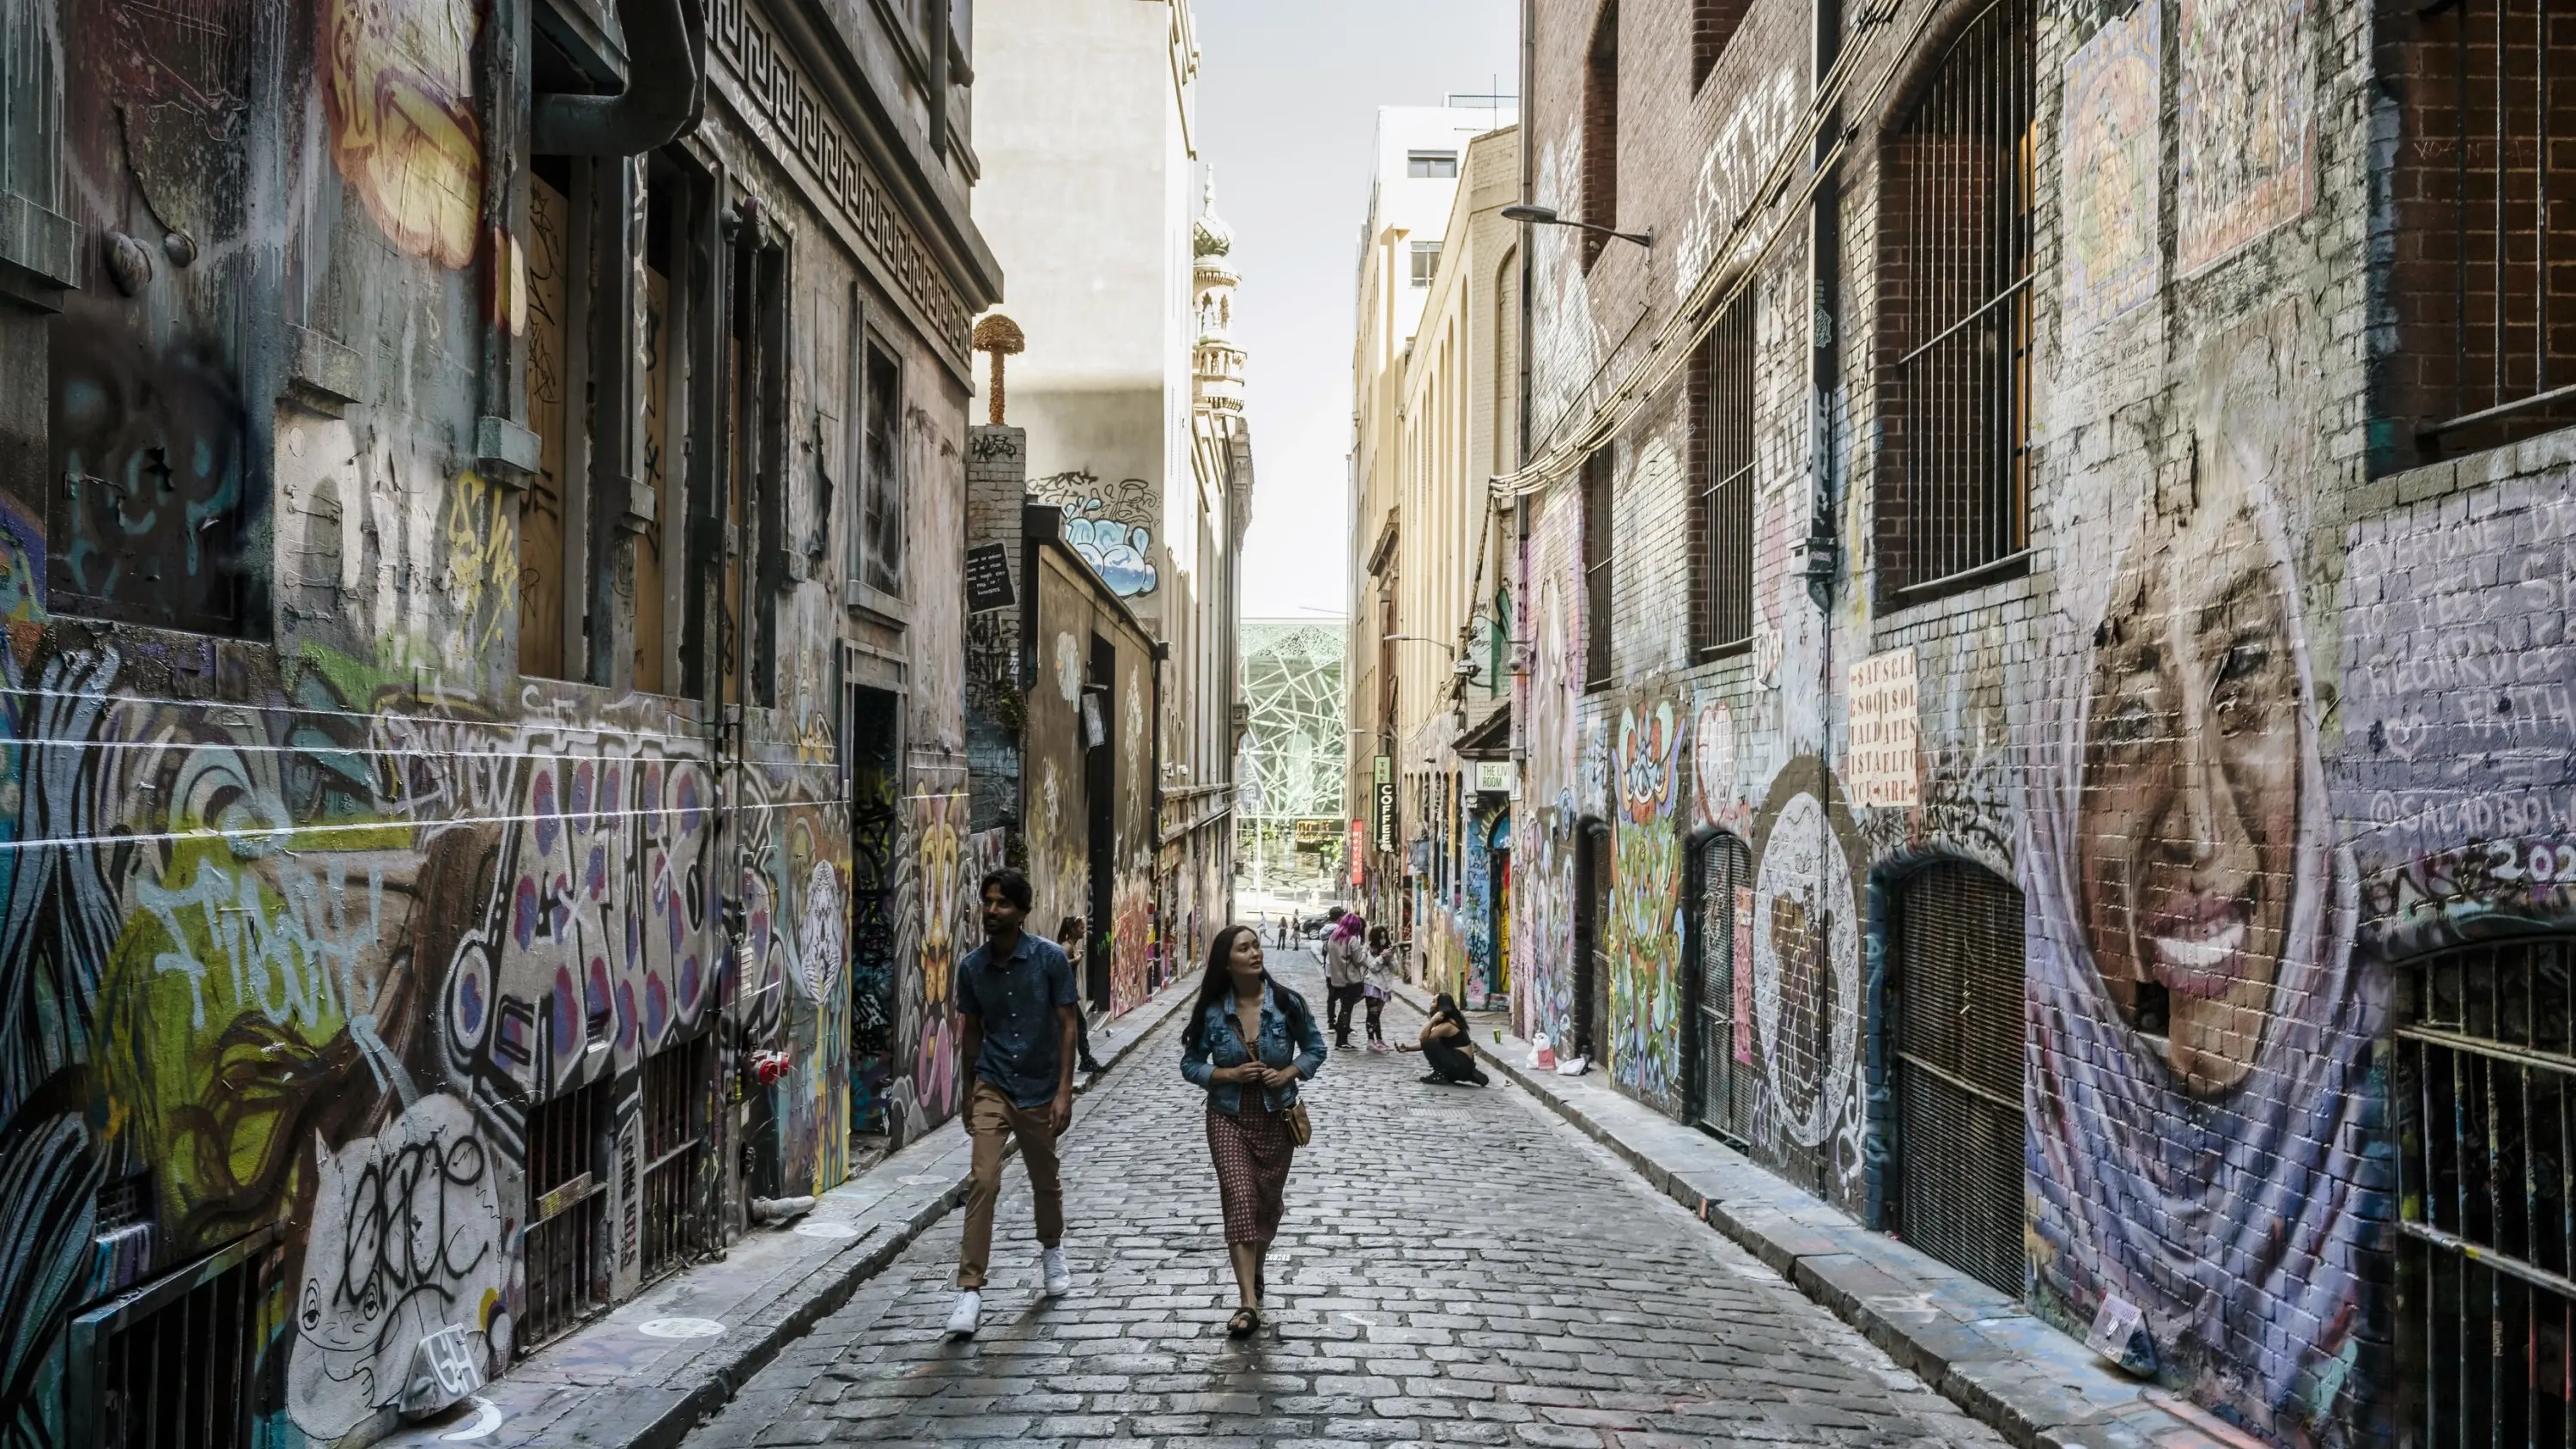 Two people walk between the street-art covered walls of Hosier Lane. Image credit: Visit Victoria